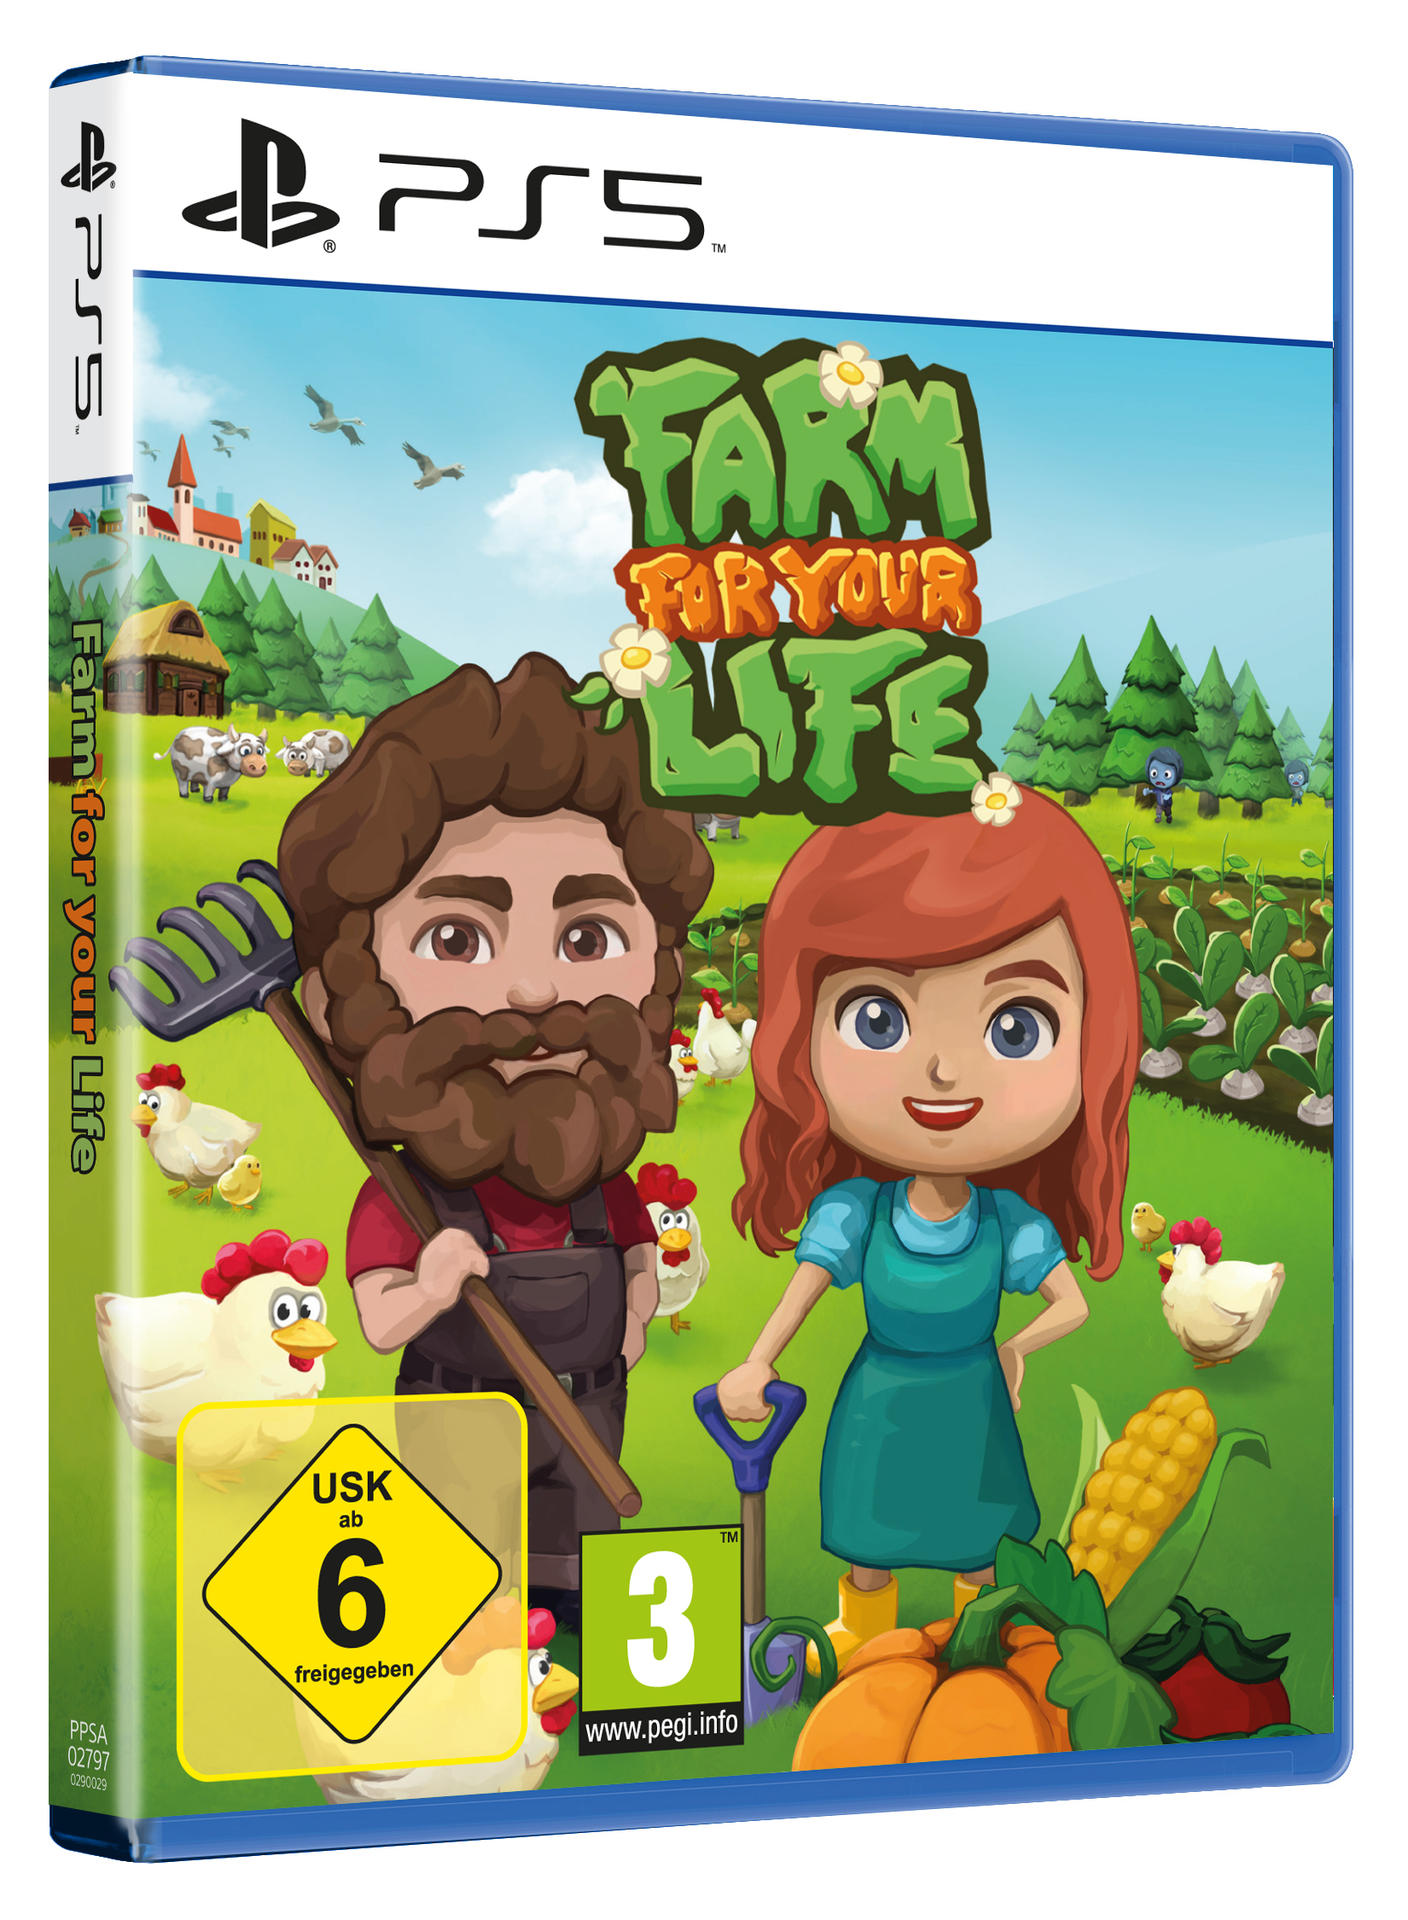 Life for Farm 5] Bauernhof - Simulation [PlayStation - your